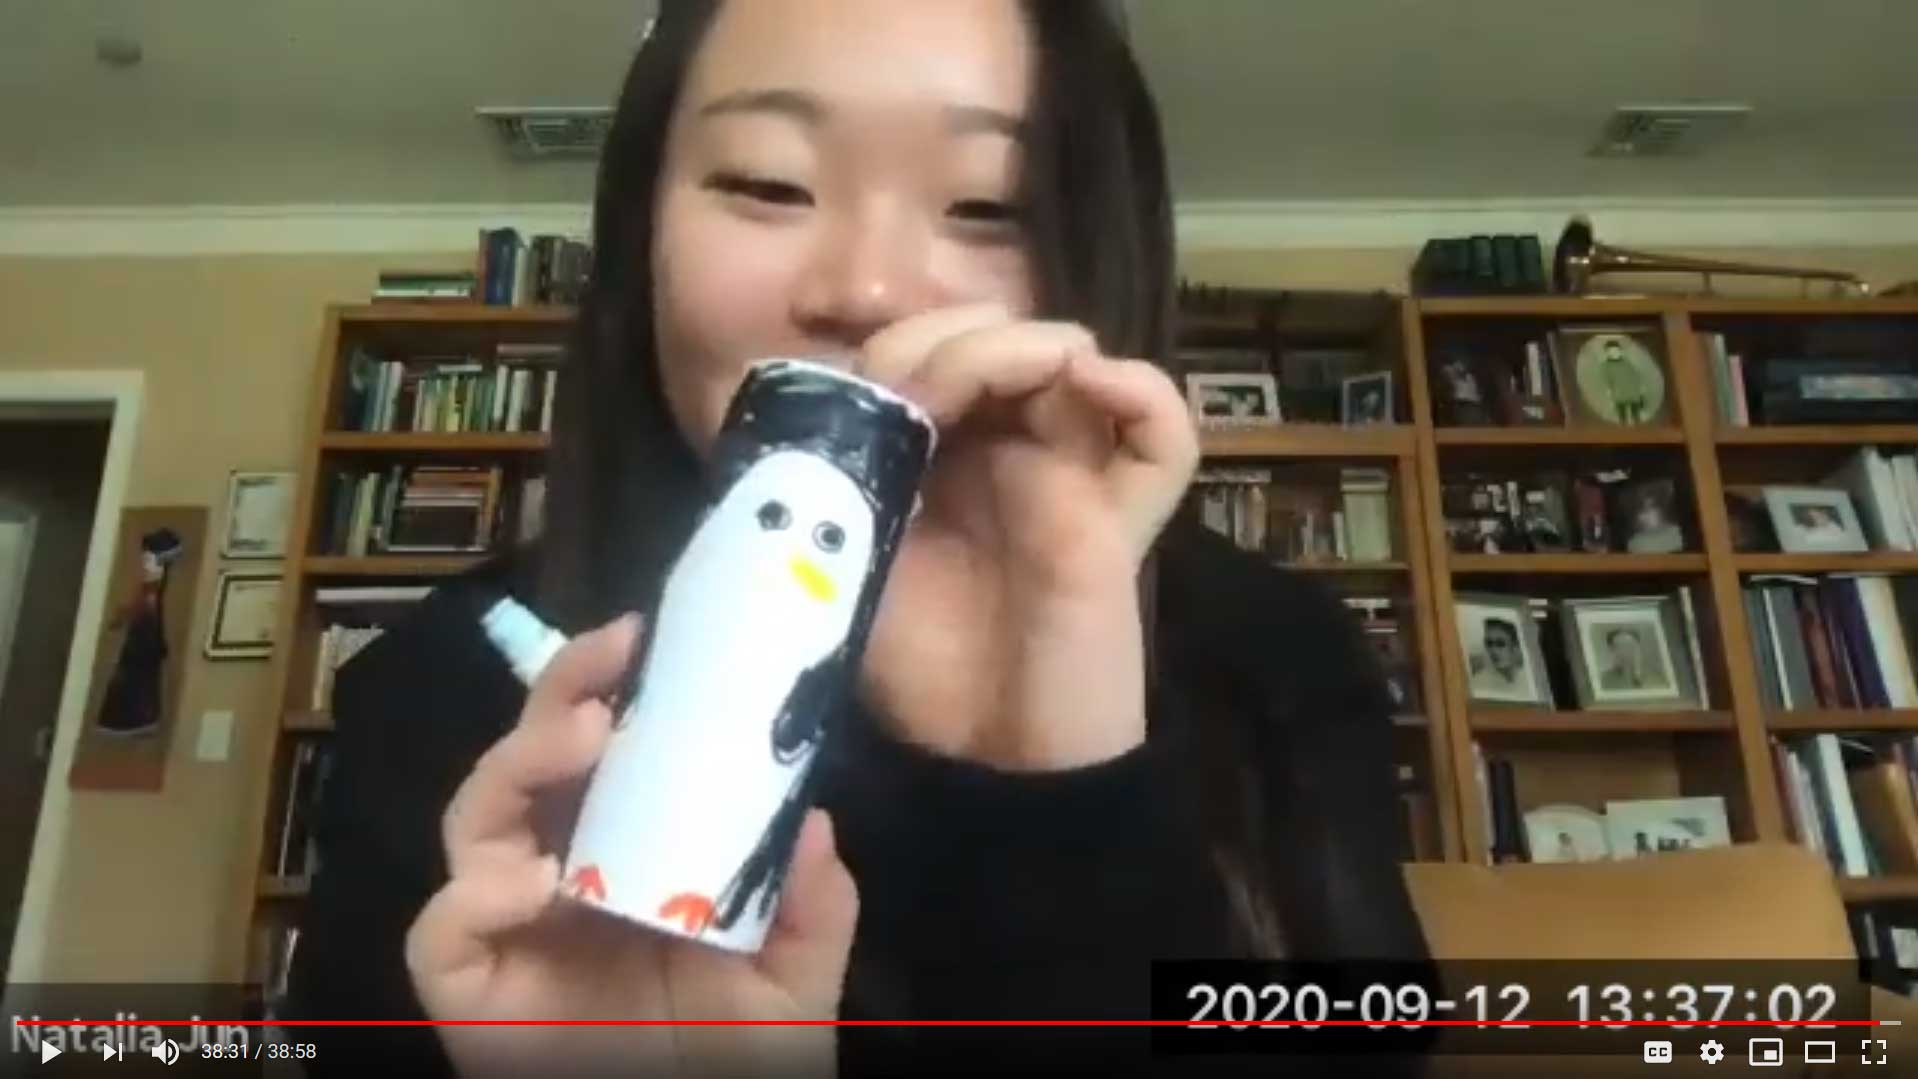 Mr. Popper's Penguins video image